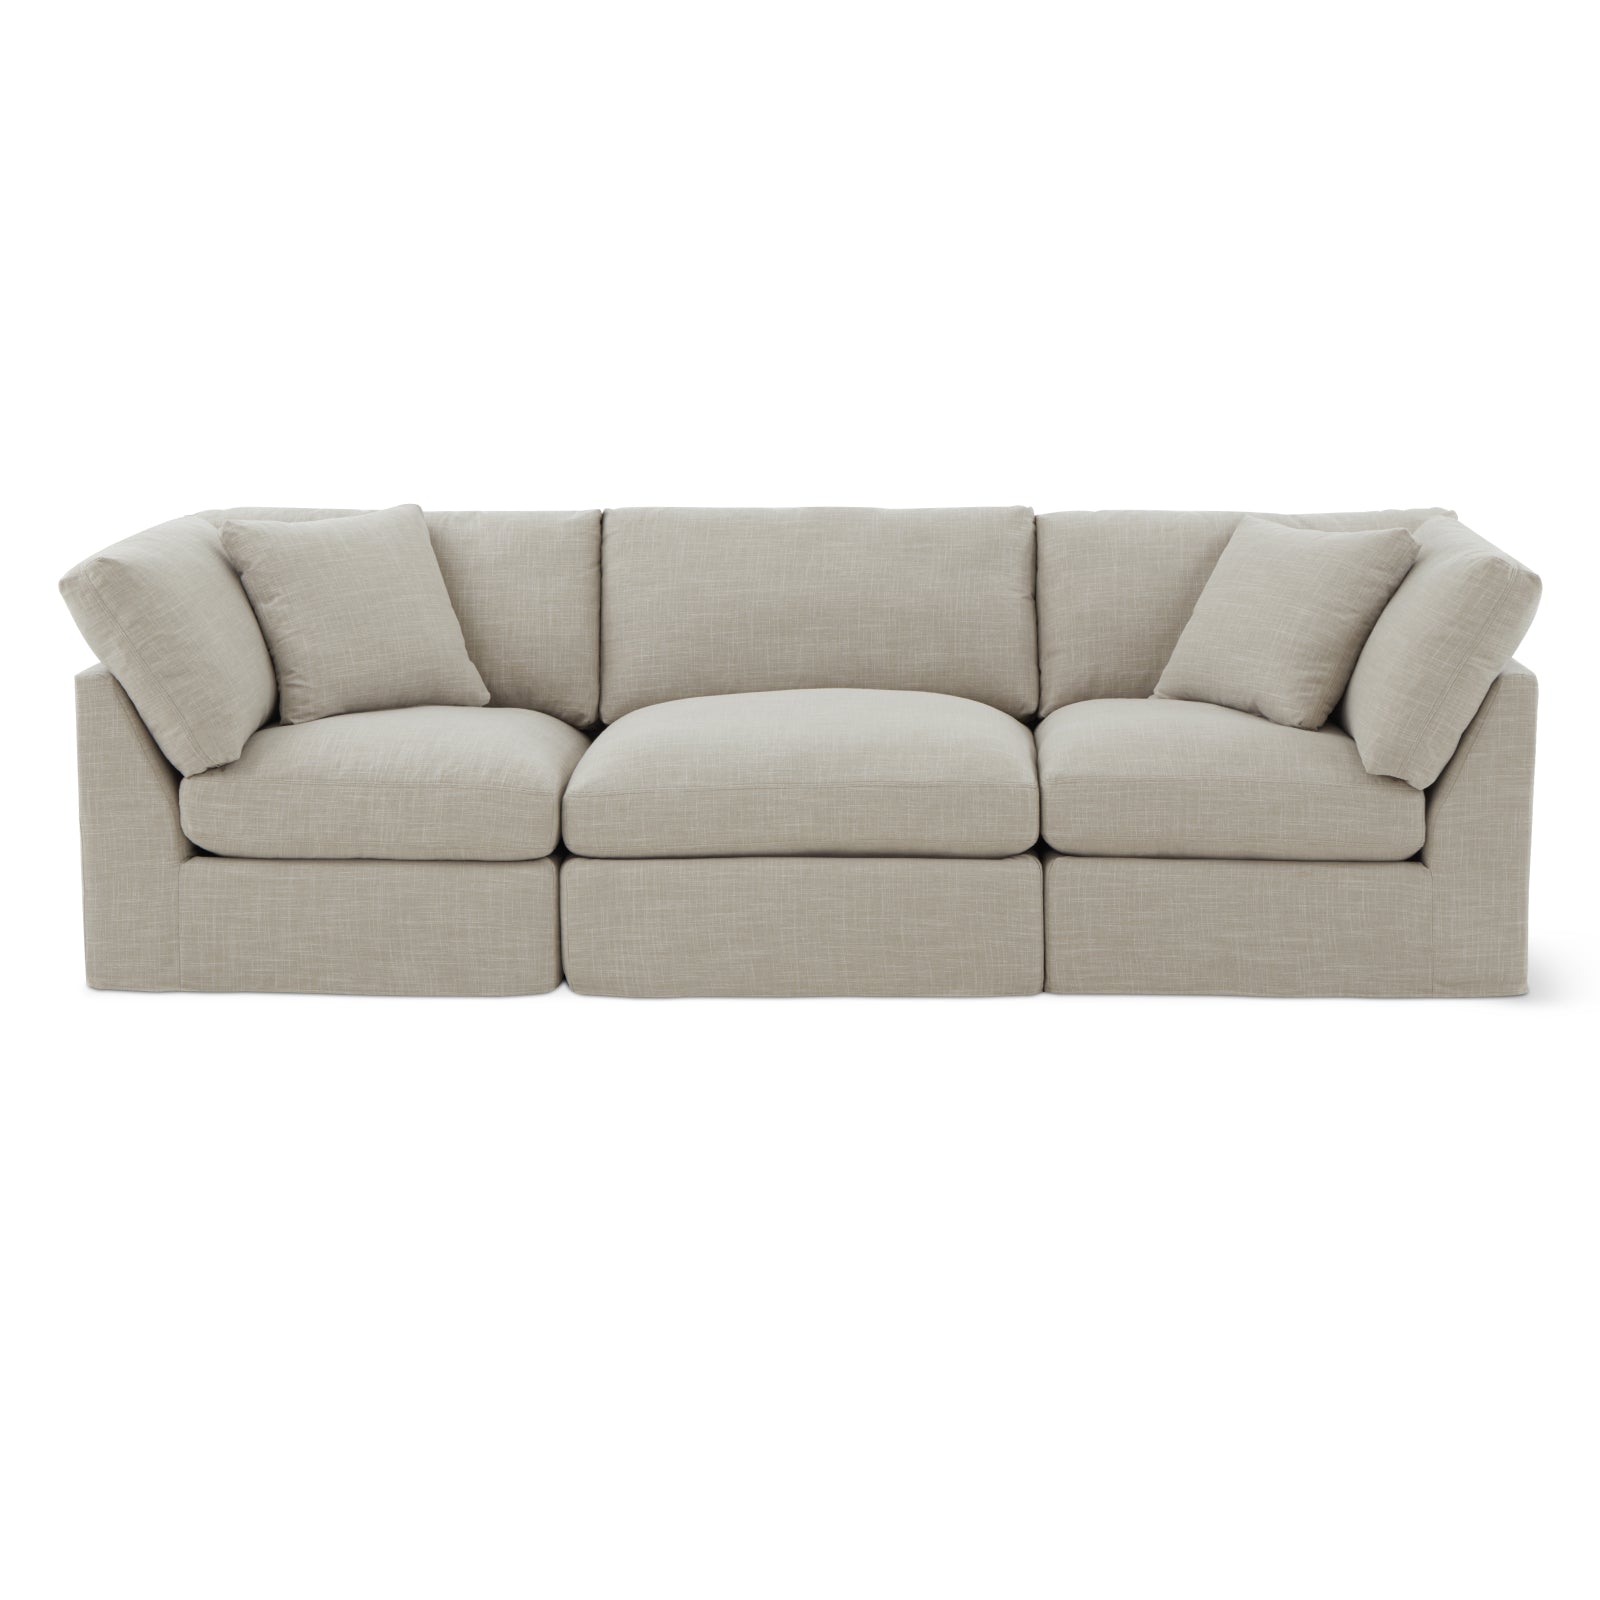 Get Together™ 3-Piece Modular Sofa, Standard, Light Pebble - Image 11